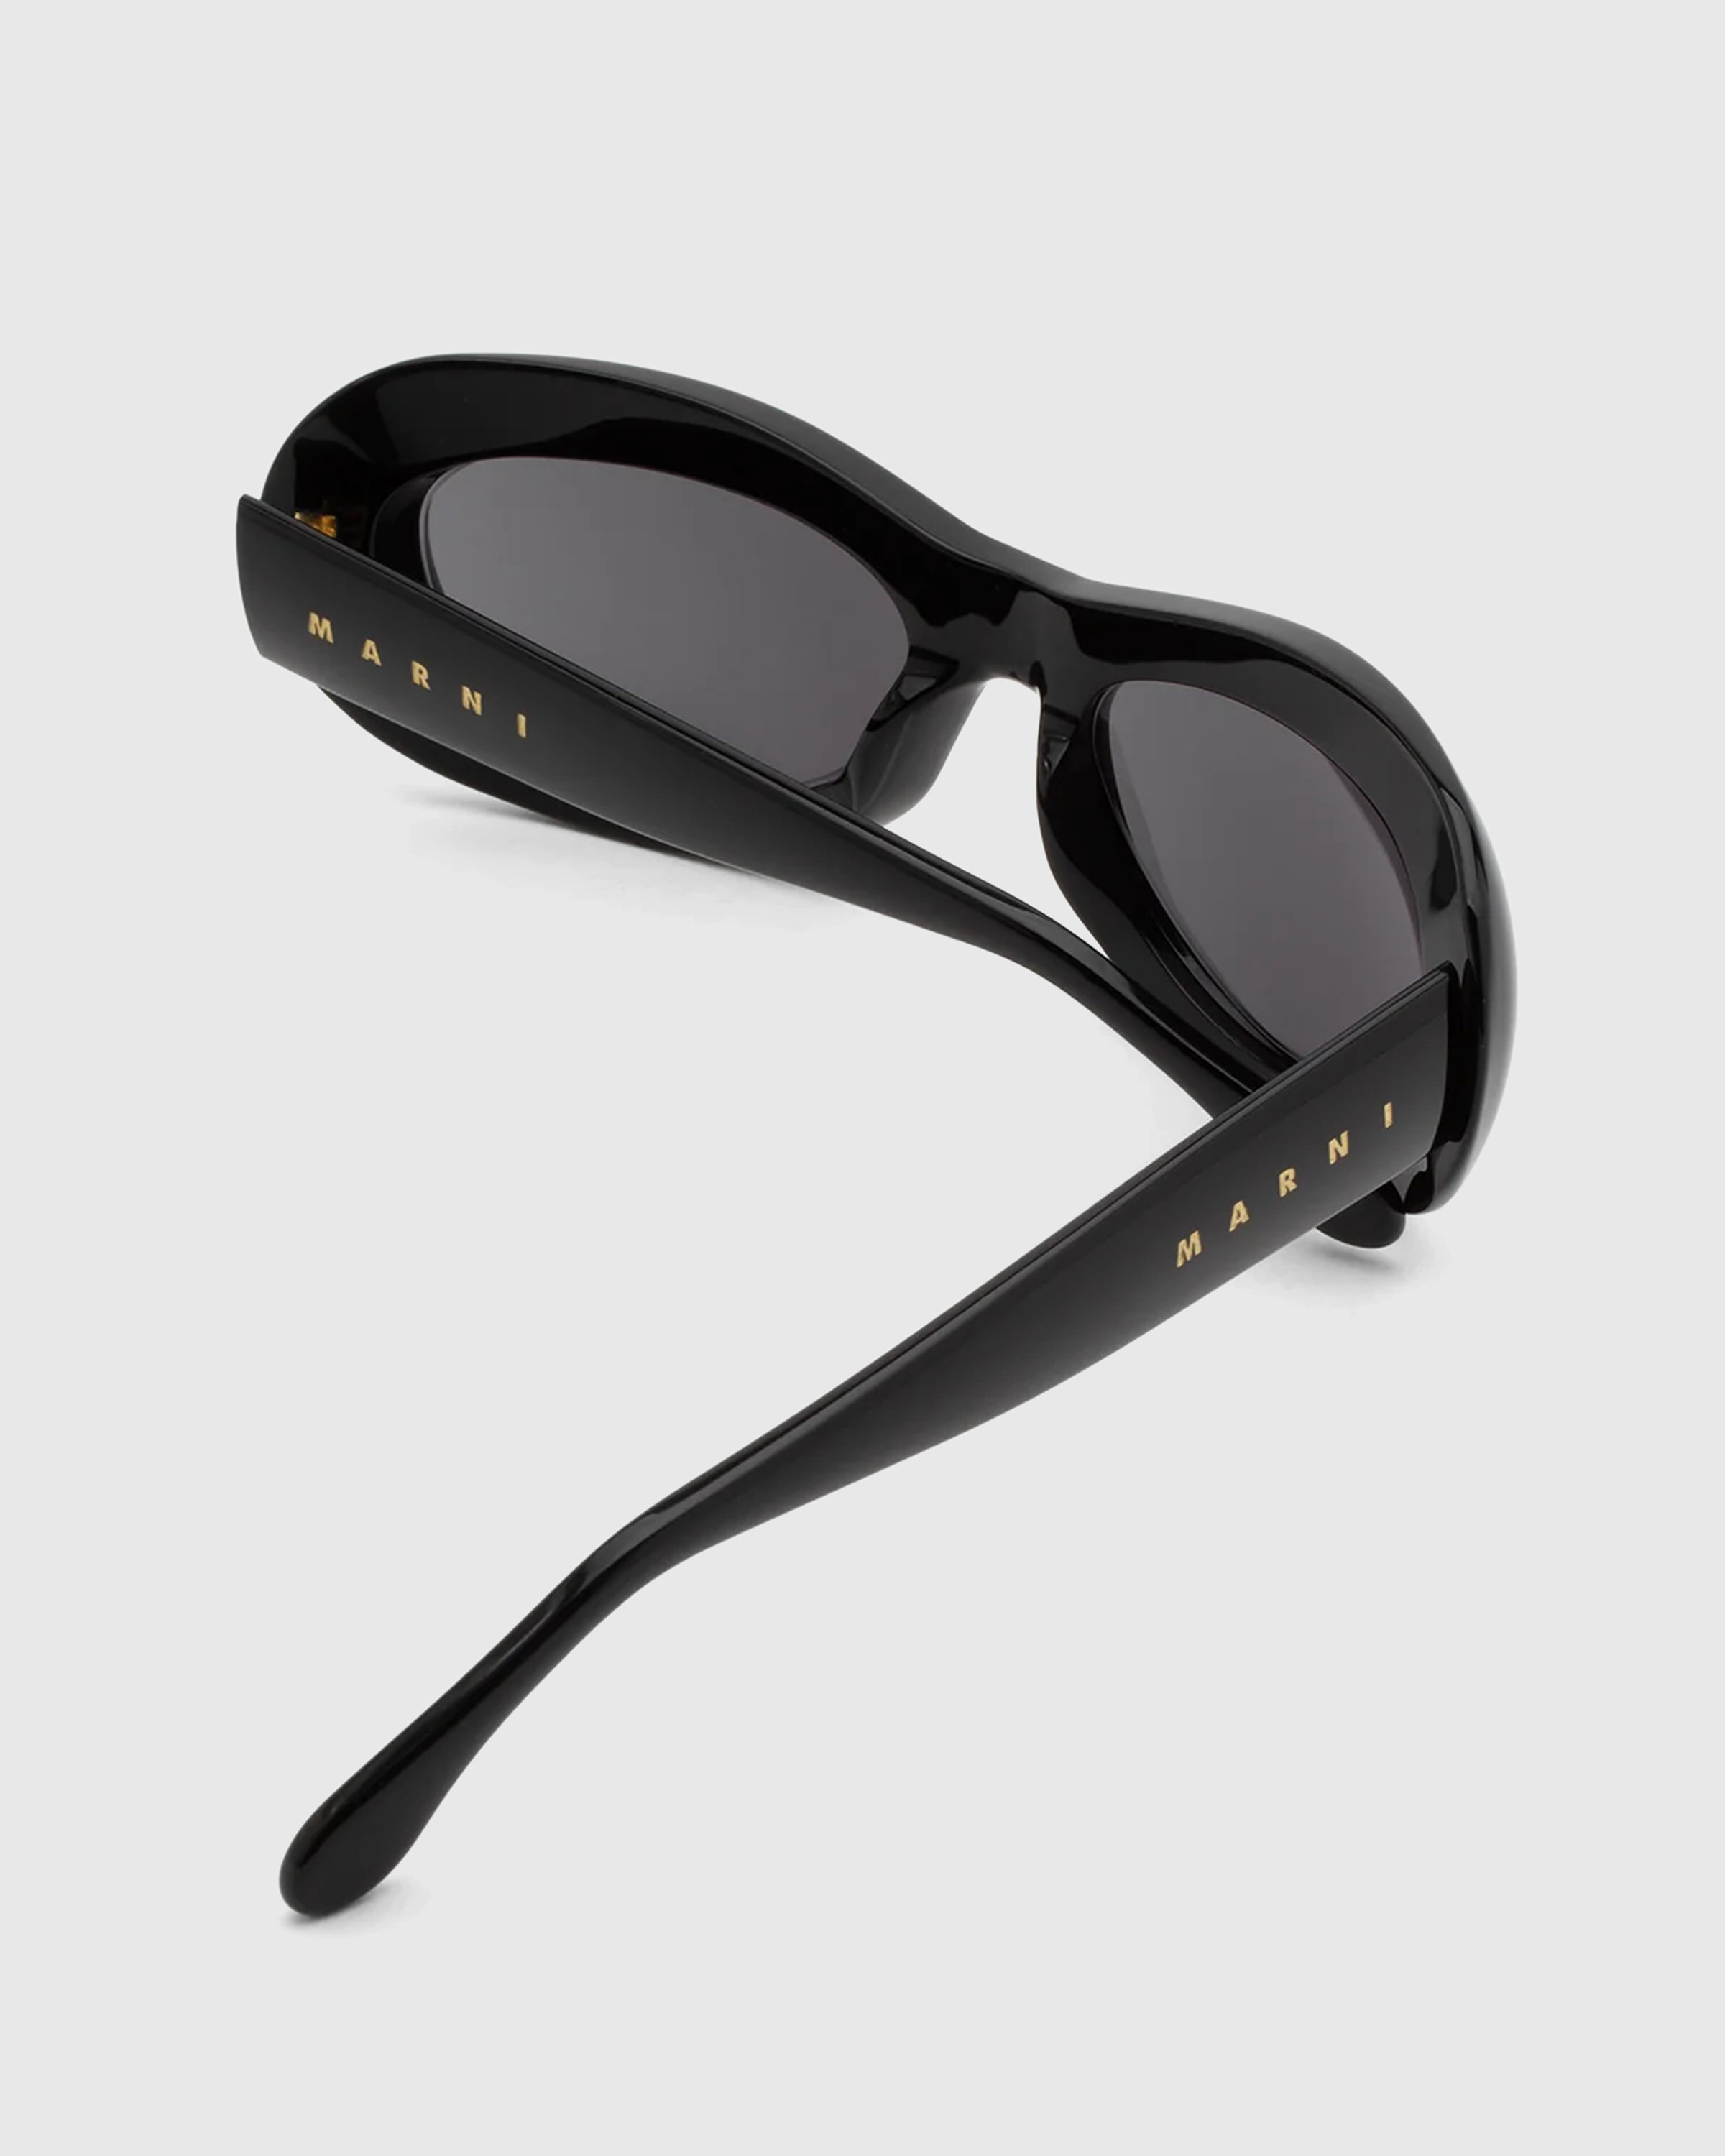 Marni x retrosuperfuture – Field Of Rushes Black - Sunglasses - Black - Image 4